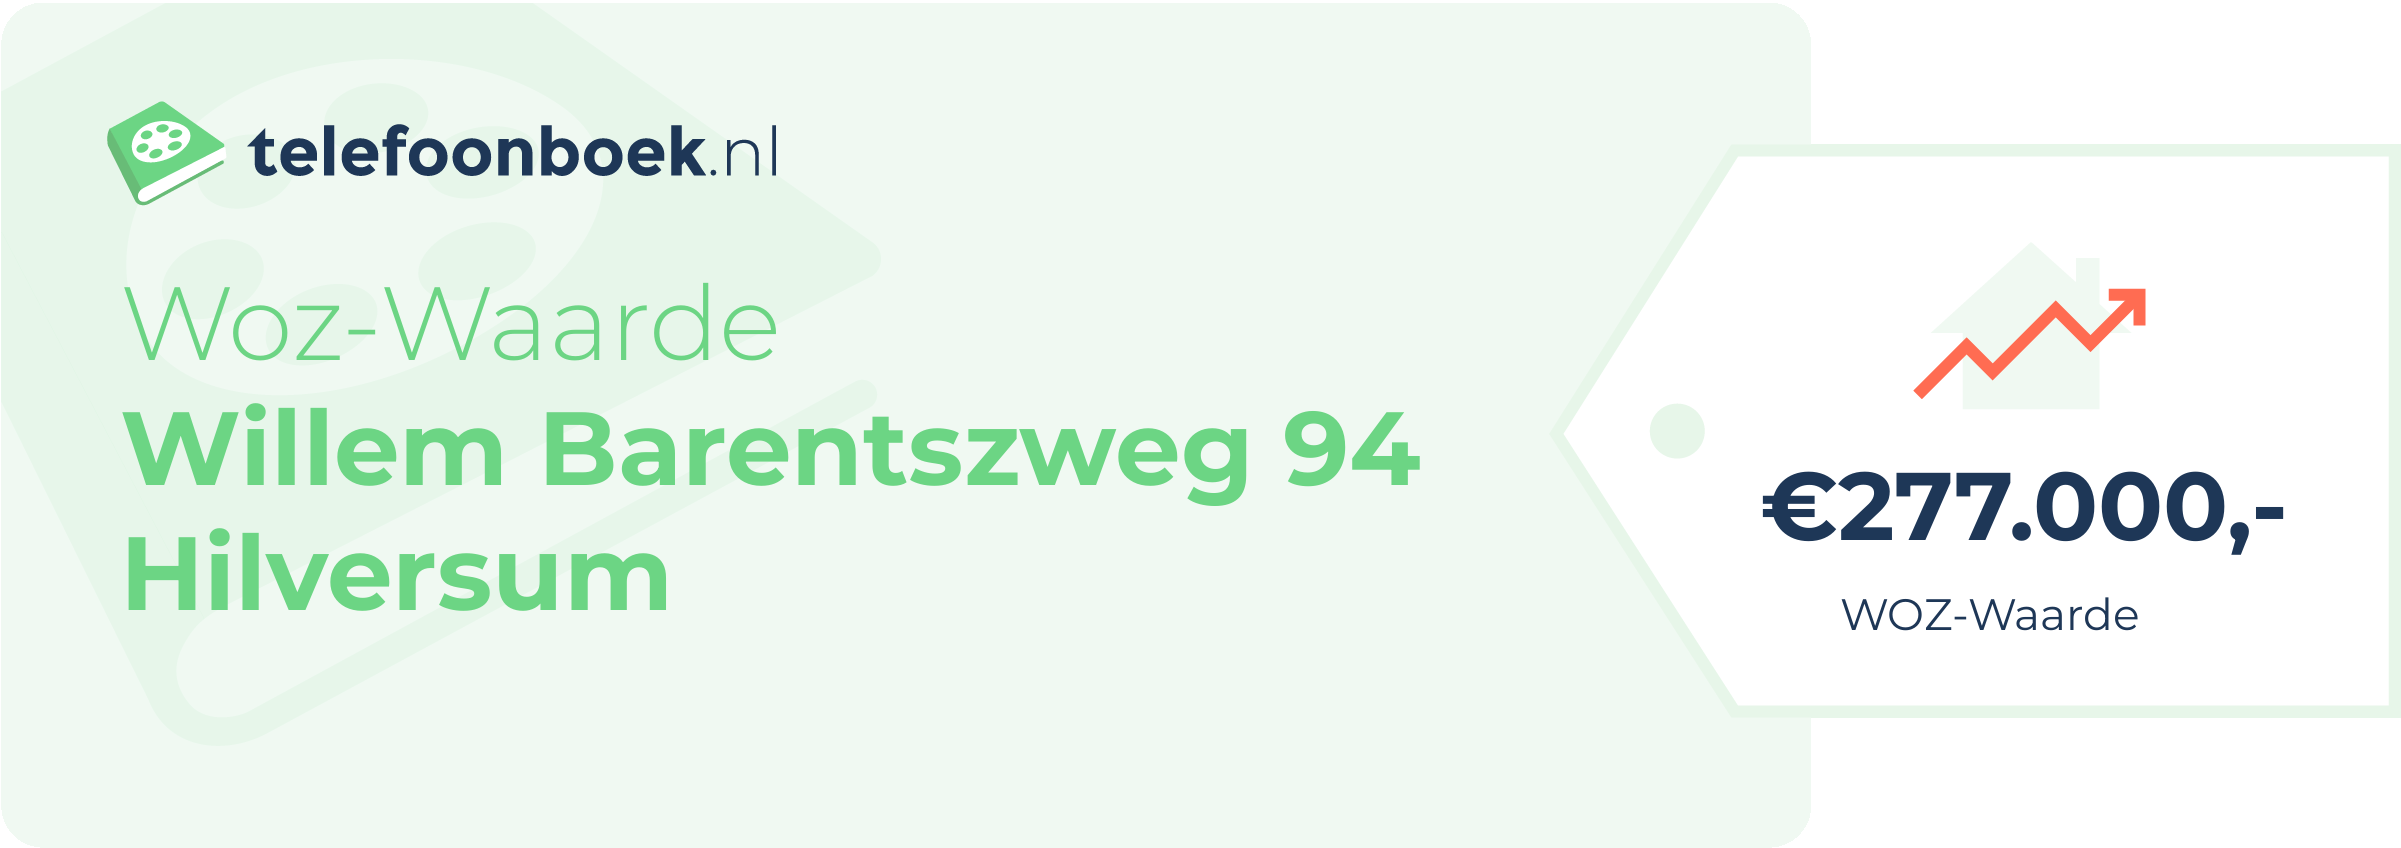 WOZ-waarde Willem Barentszweg 94 Hilversum